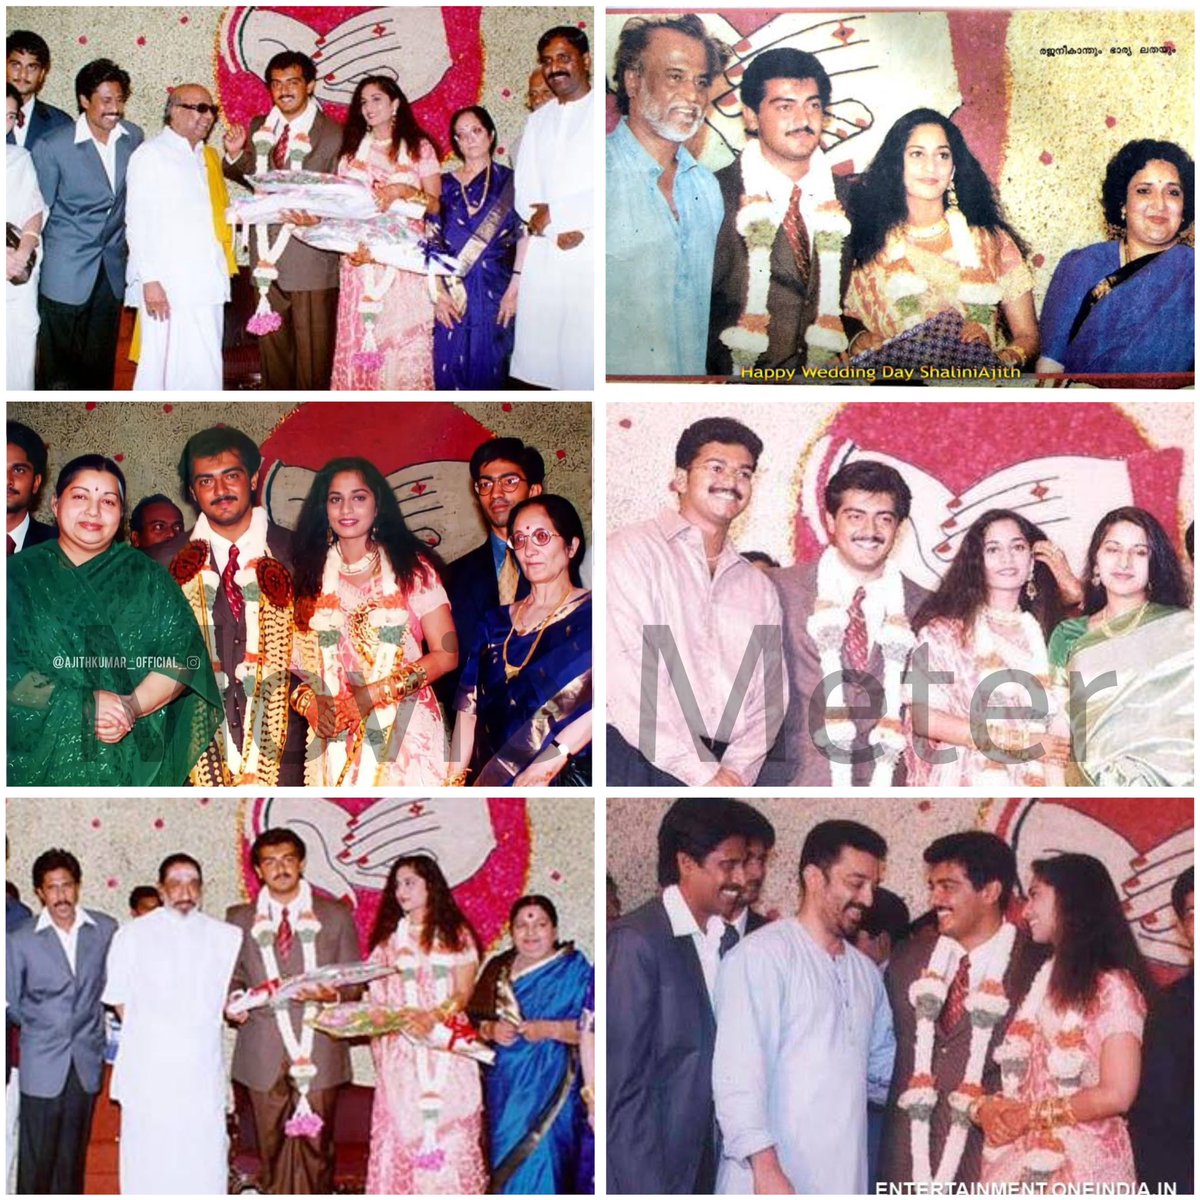 Throwback memories of #Ajithkumar & Shalini in the occasion of their wedding anniversary.

Karunanidhi | Jayalalitha | SivajiGanesan | Rajinikanth | Kamalhaasan | Vijay